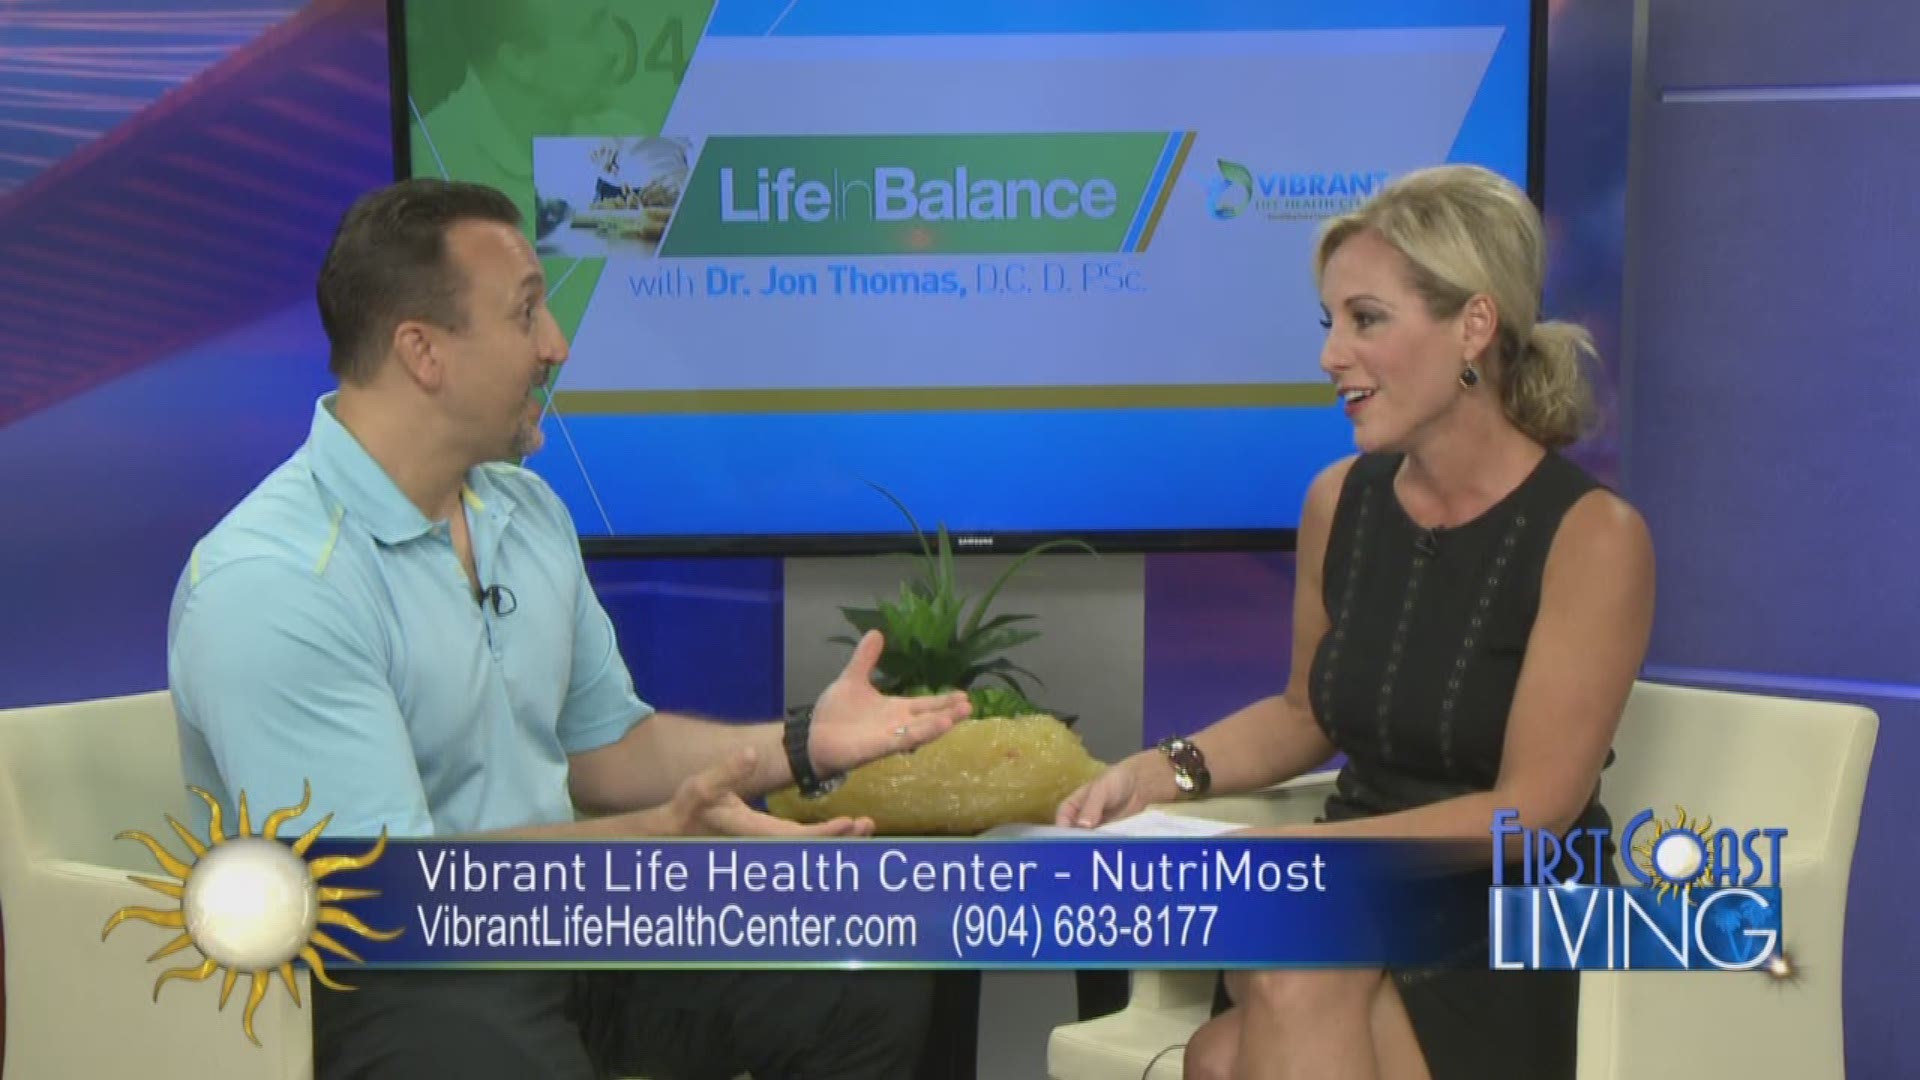 Vibrant Life Health Center - Life In Balance